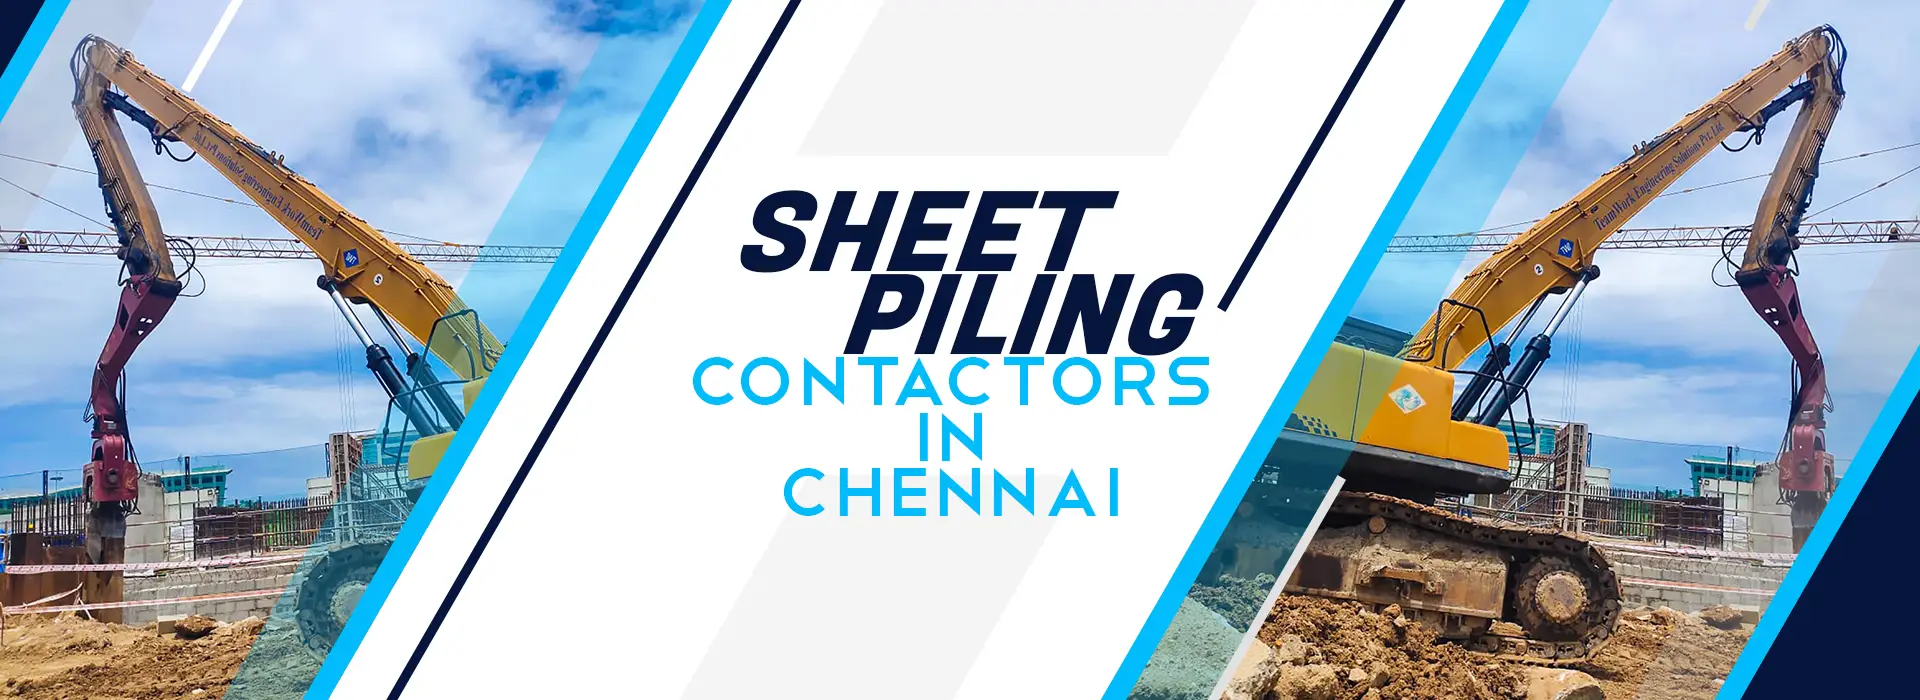 Sheet piling shoring contractors in chennai